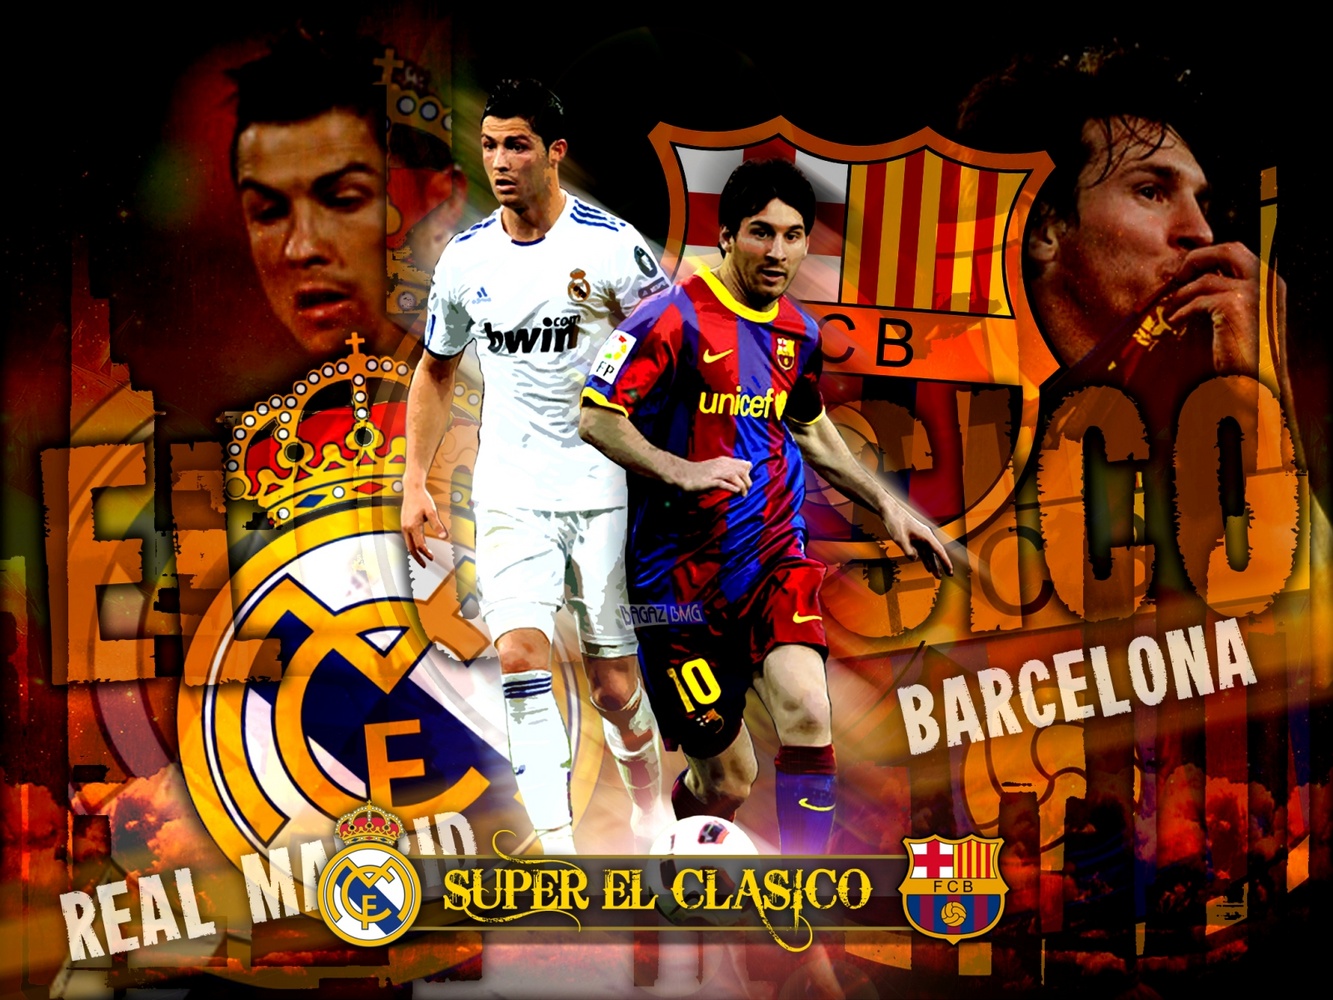 http://1.bp.blogspot.com/-vBZ7_VsAQWw/TuqyZ3EpSsI/AAAAAAAAAAw/Rdpouhg6UnY/s1600/Lionel+Messi+%2526+Cristiano+Ronaldo+Wallpaper.jpeg